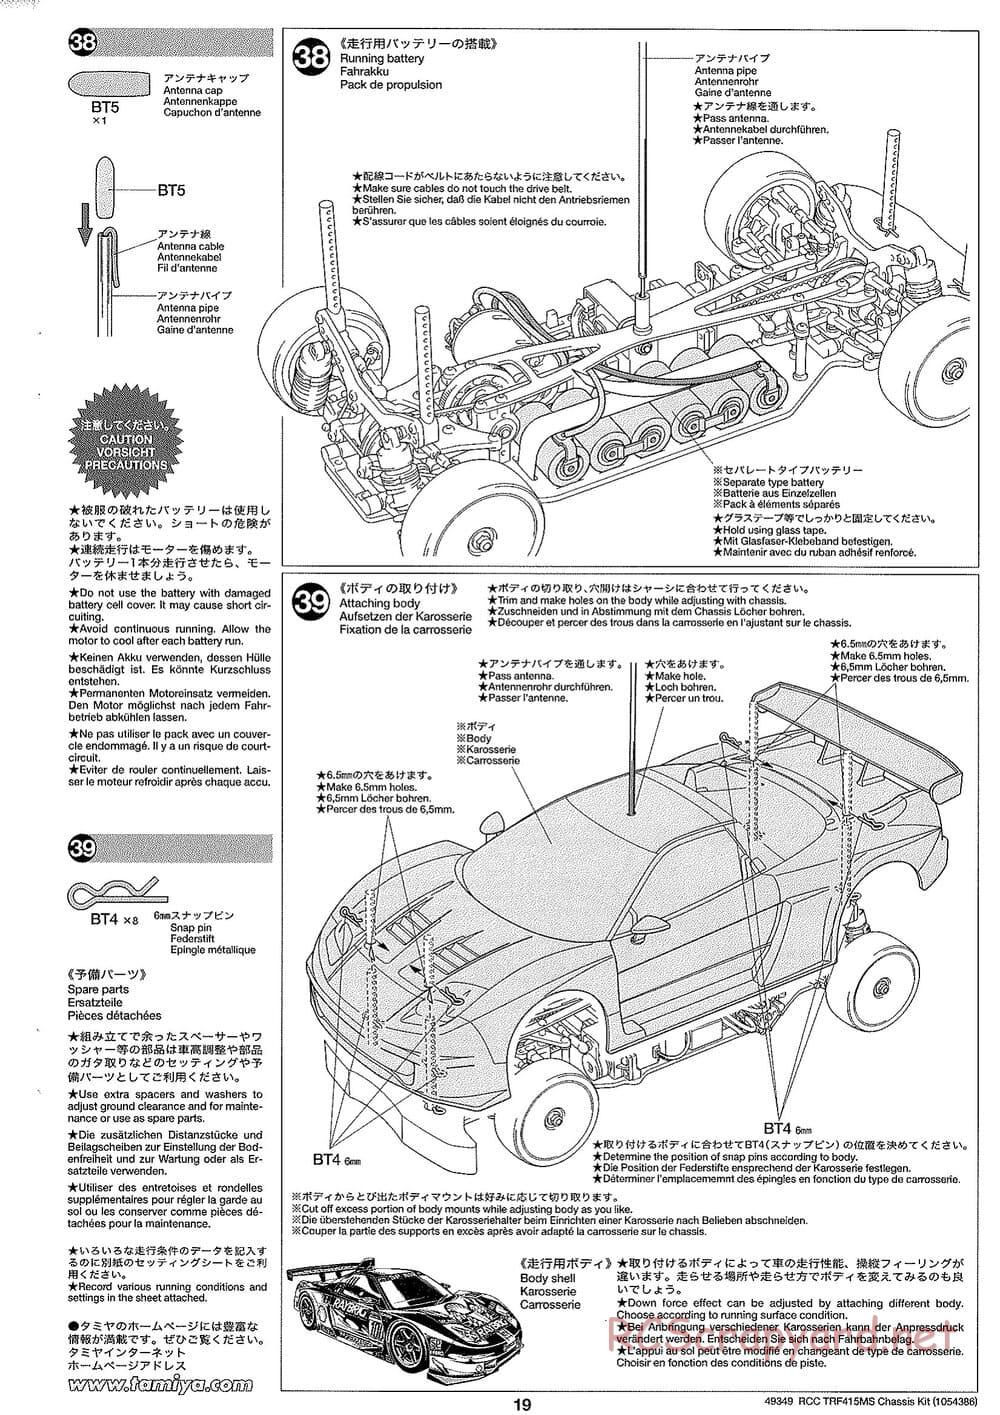 Tamiya - TRF415-MS Chassis - Manual - Page 19